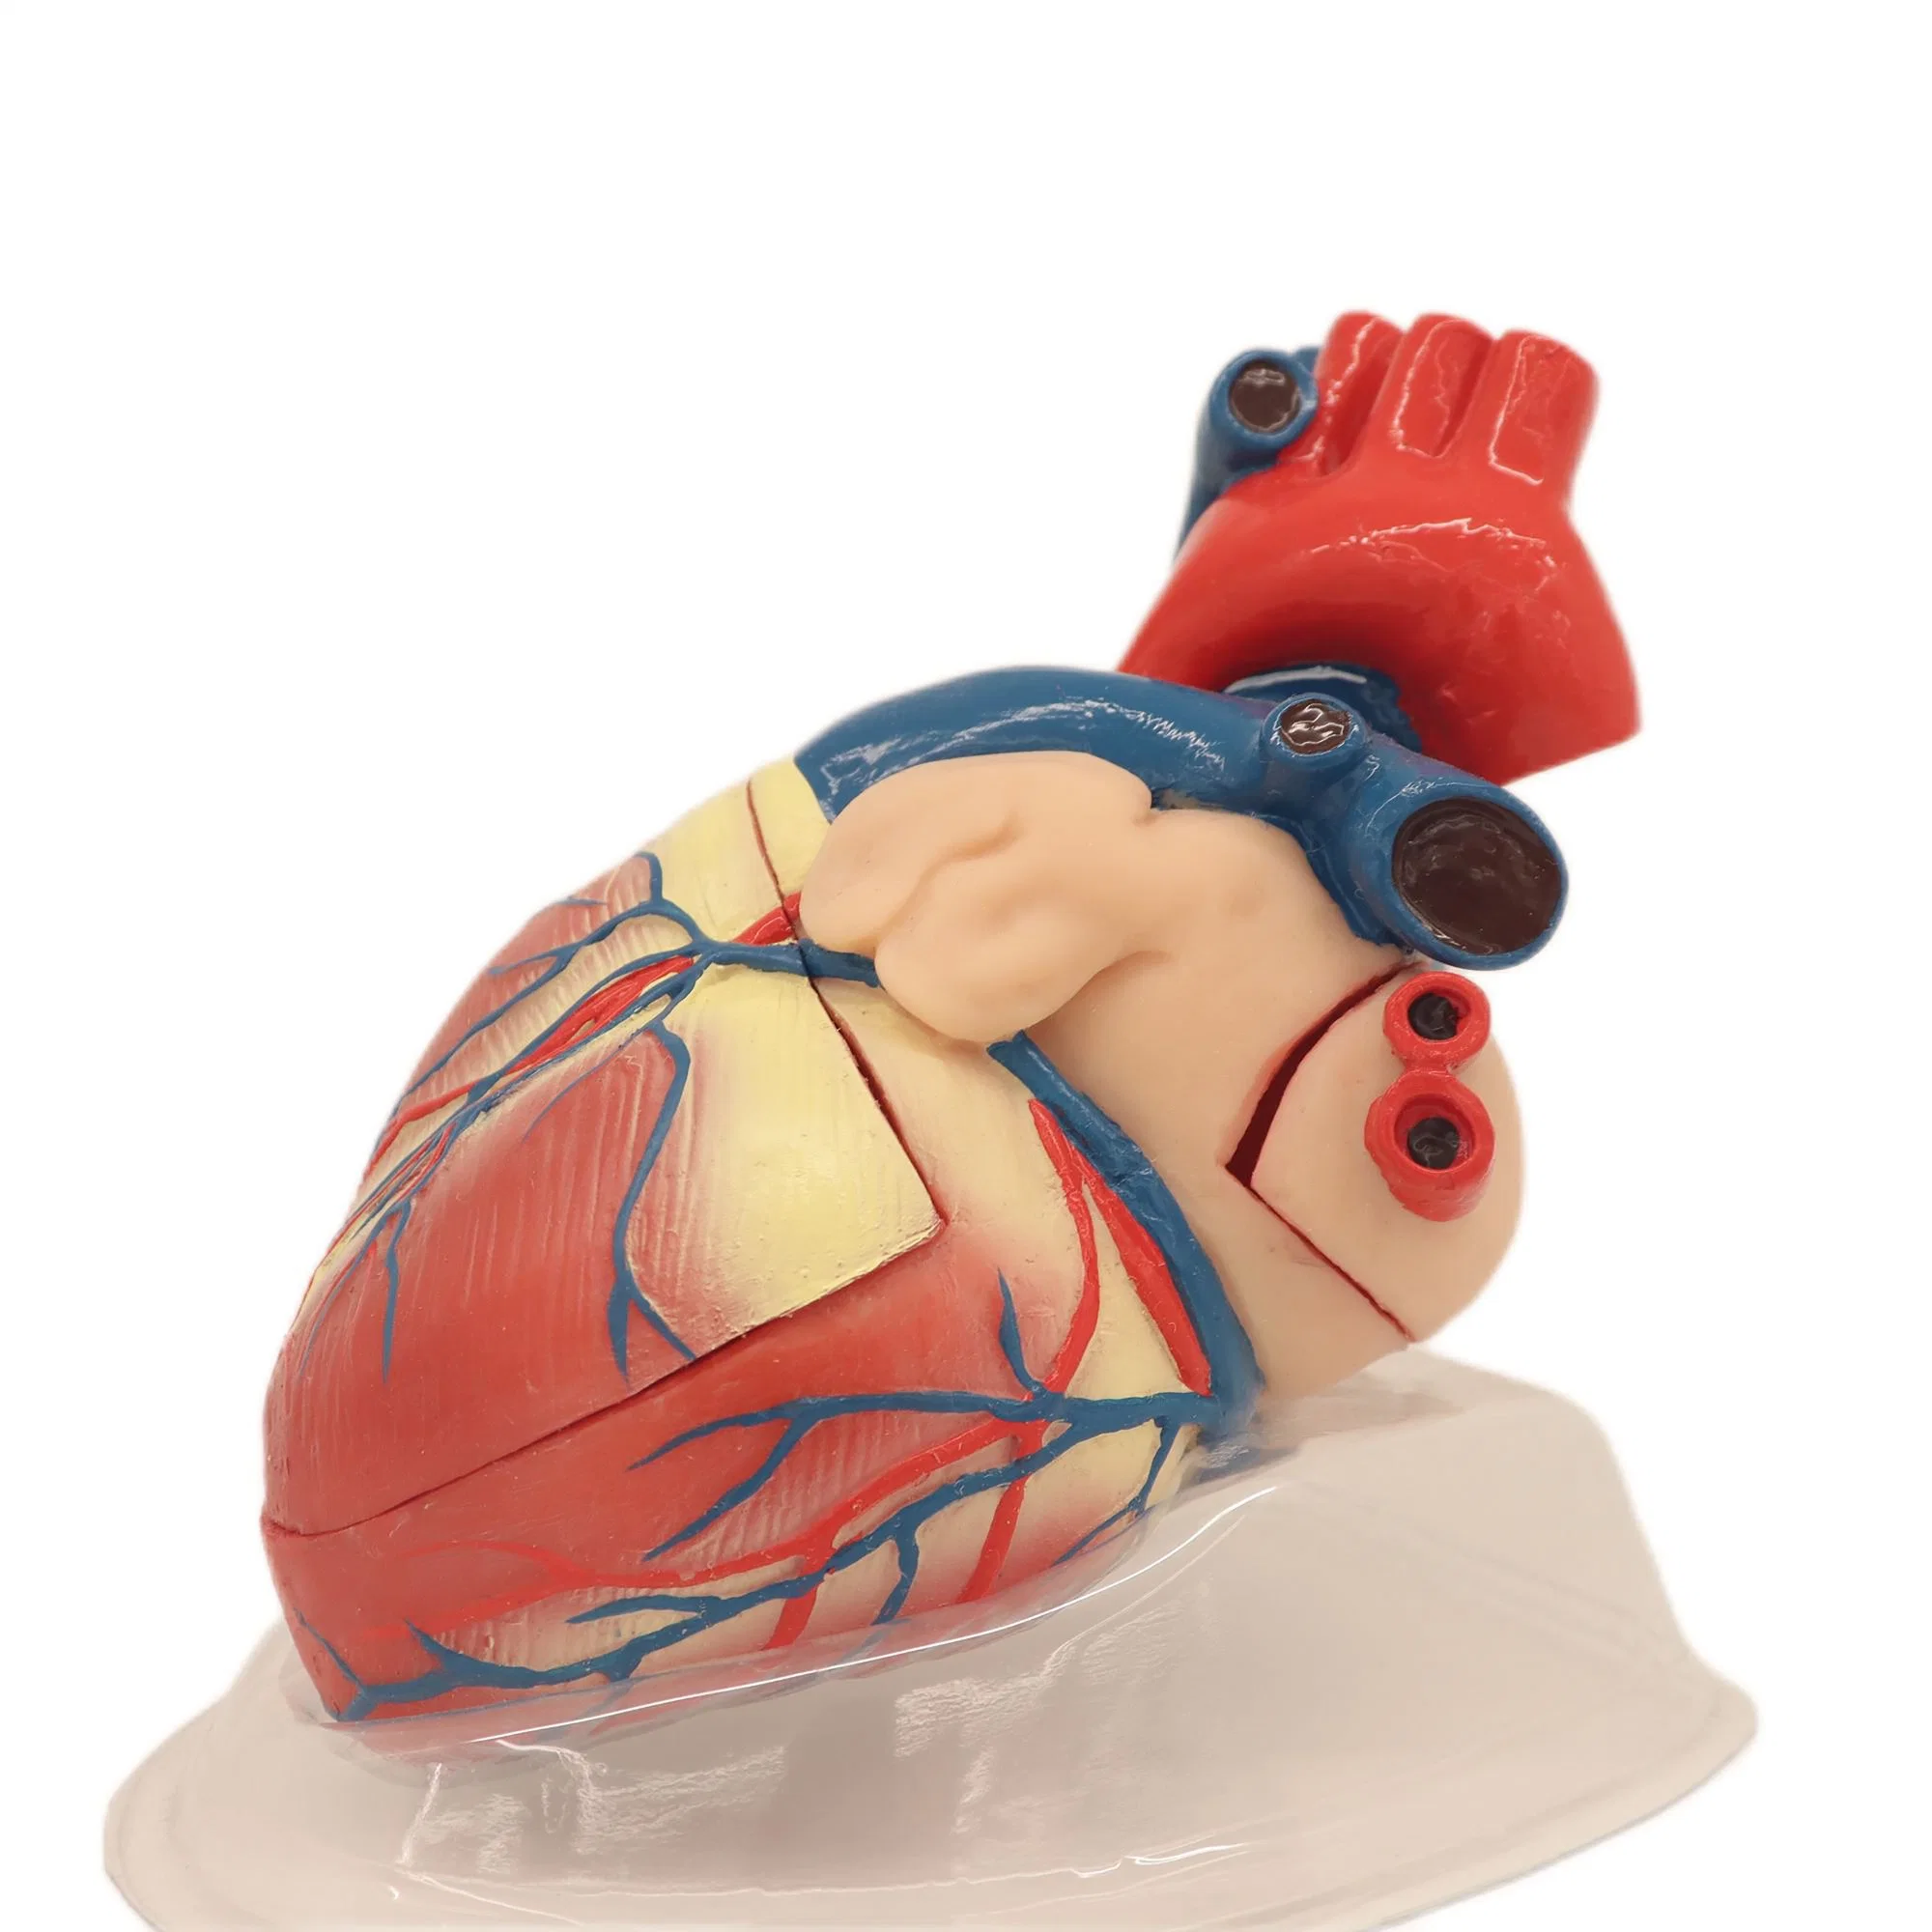 Disposable Medical Supplies Lung Segments Model